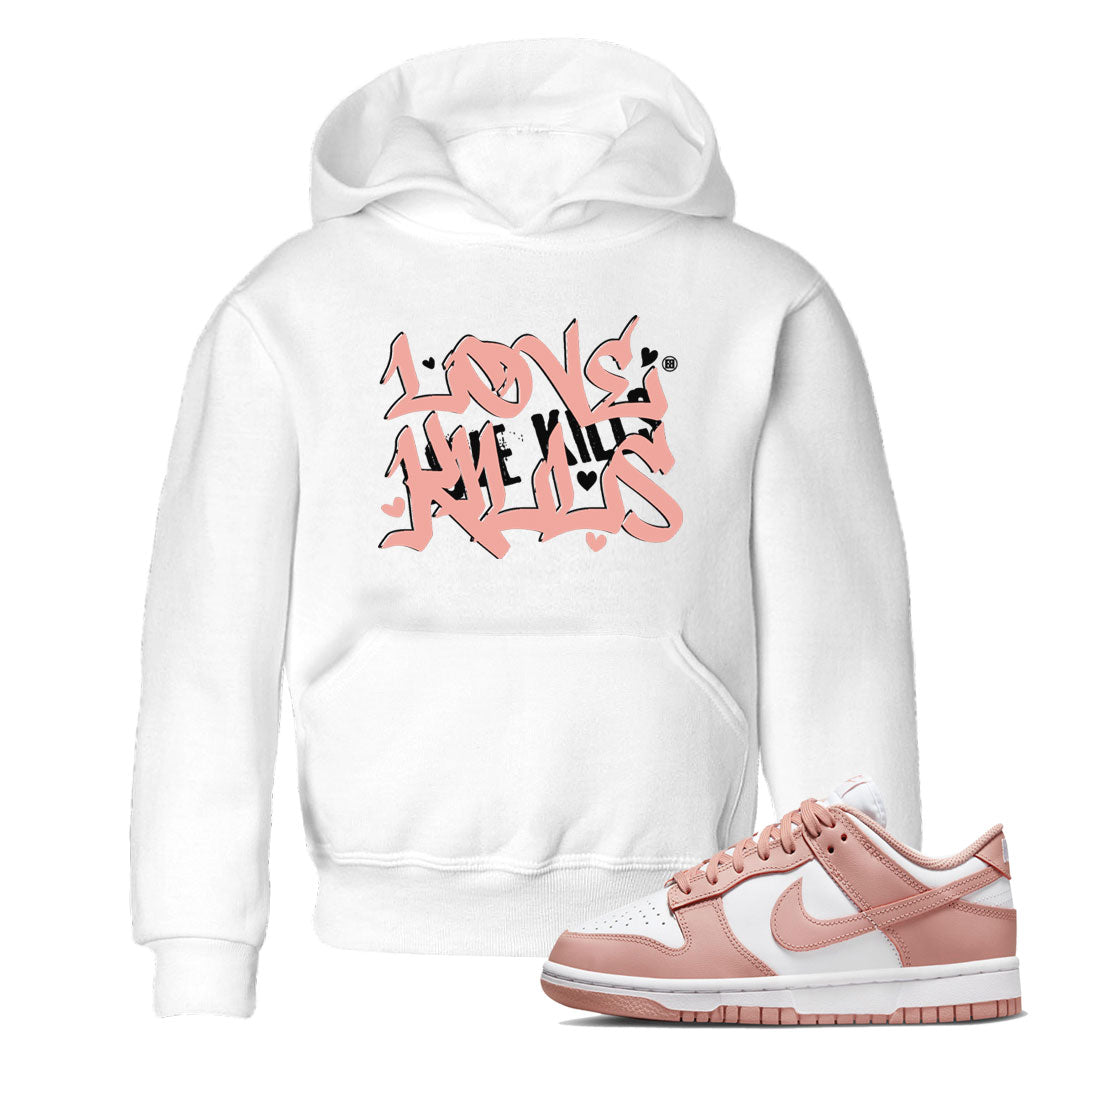 Dunks Low Rose Whisper shirt to match jordans Love Kills Streetwear Sneaker Shirt Dunk Rose Whisper Drip Gear Zone Sneaker Matching Clothing Baby Toddler White 1 T-Shirt